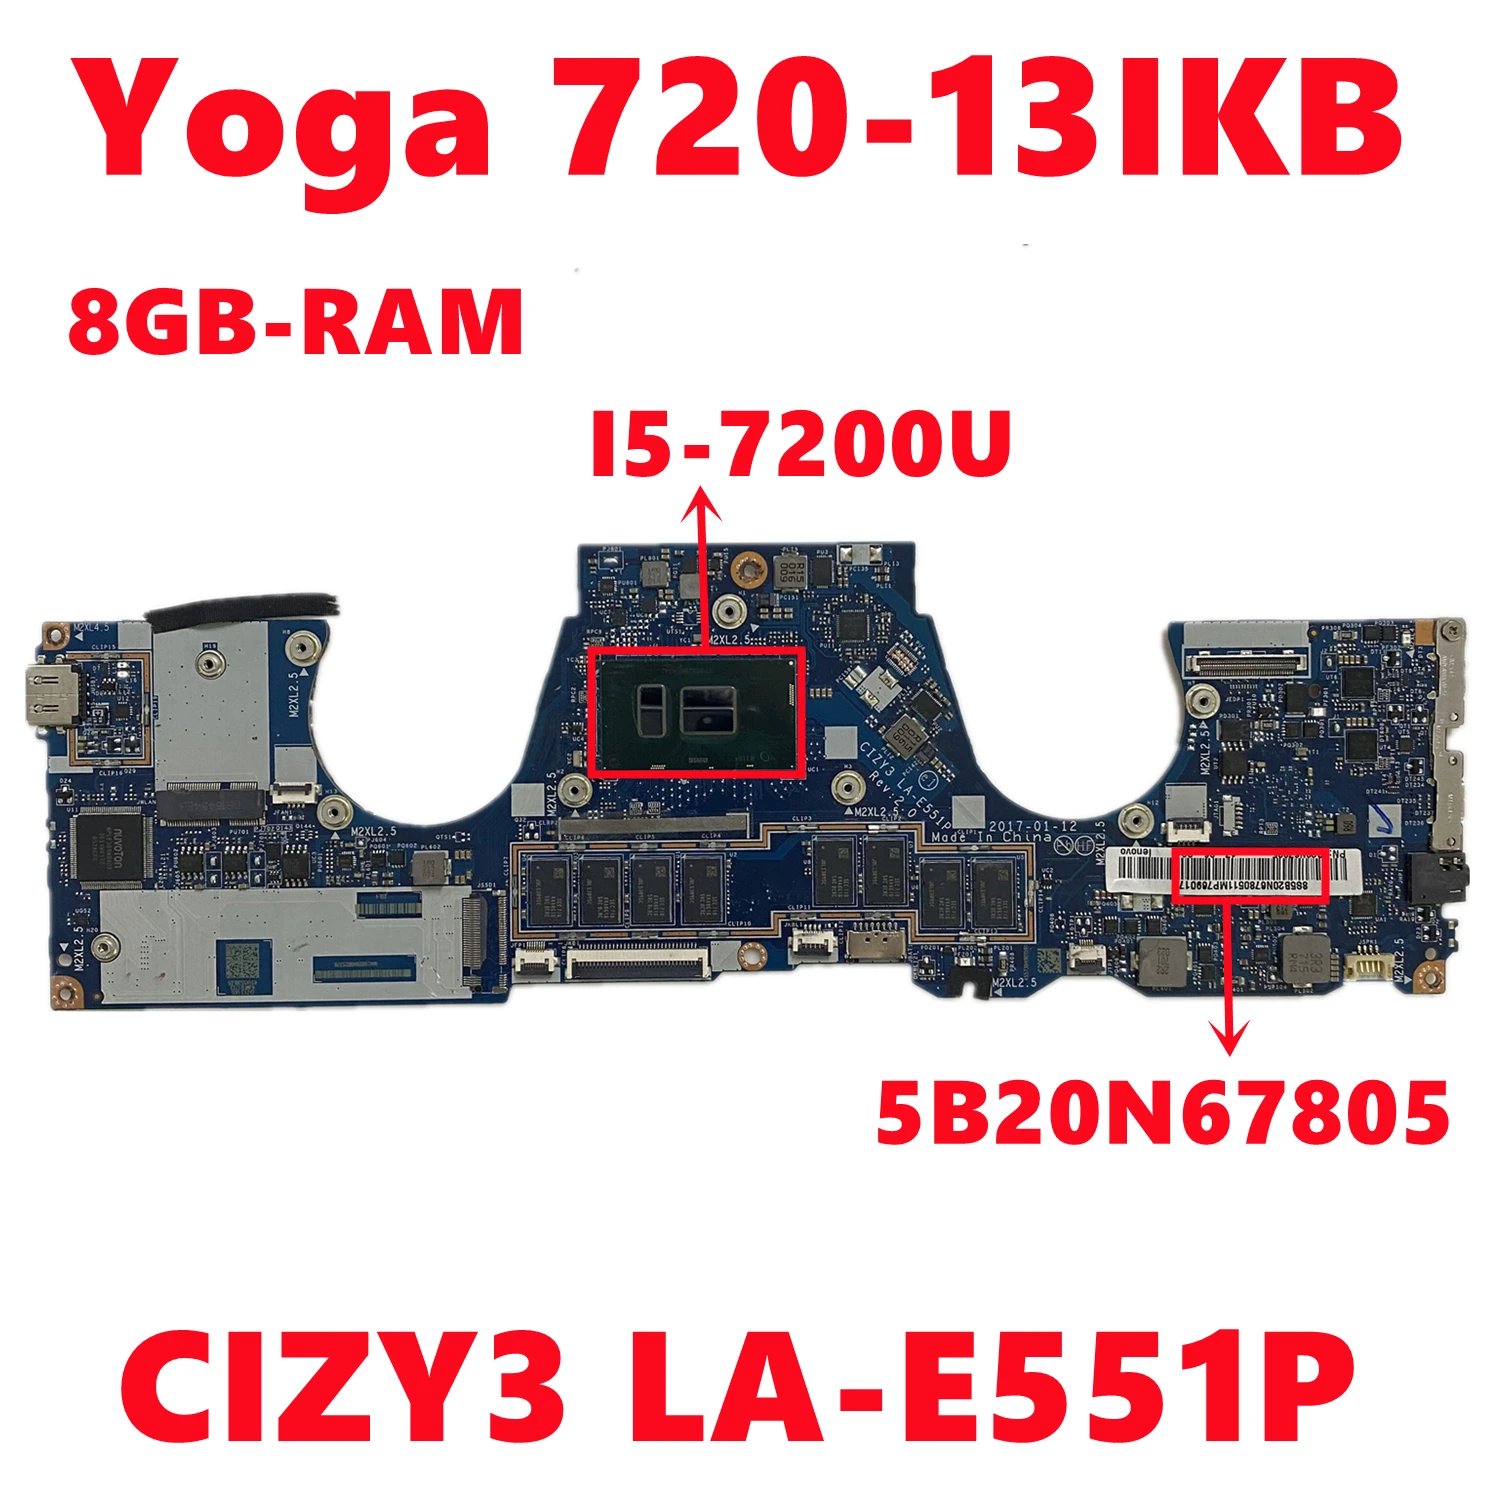 

FRU:5B20N67805 Mainboard For Lenovo Yoga 720-13IKB Laptop Motherboard CIZY3 LA-E551P With i5-7200U CPU 8GB-RAM 100% Tested OK